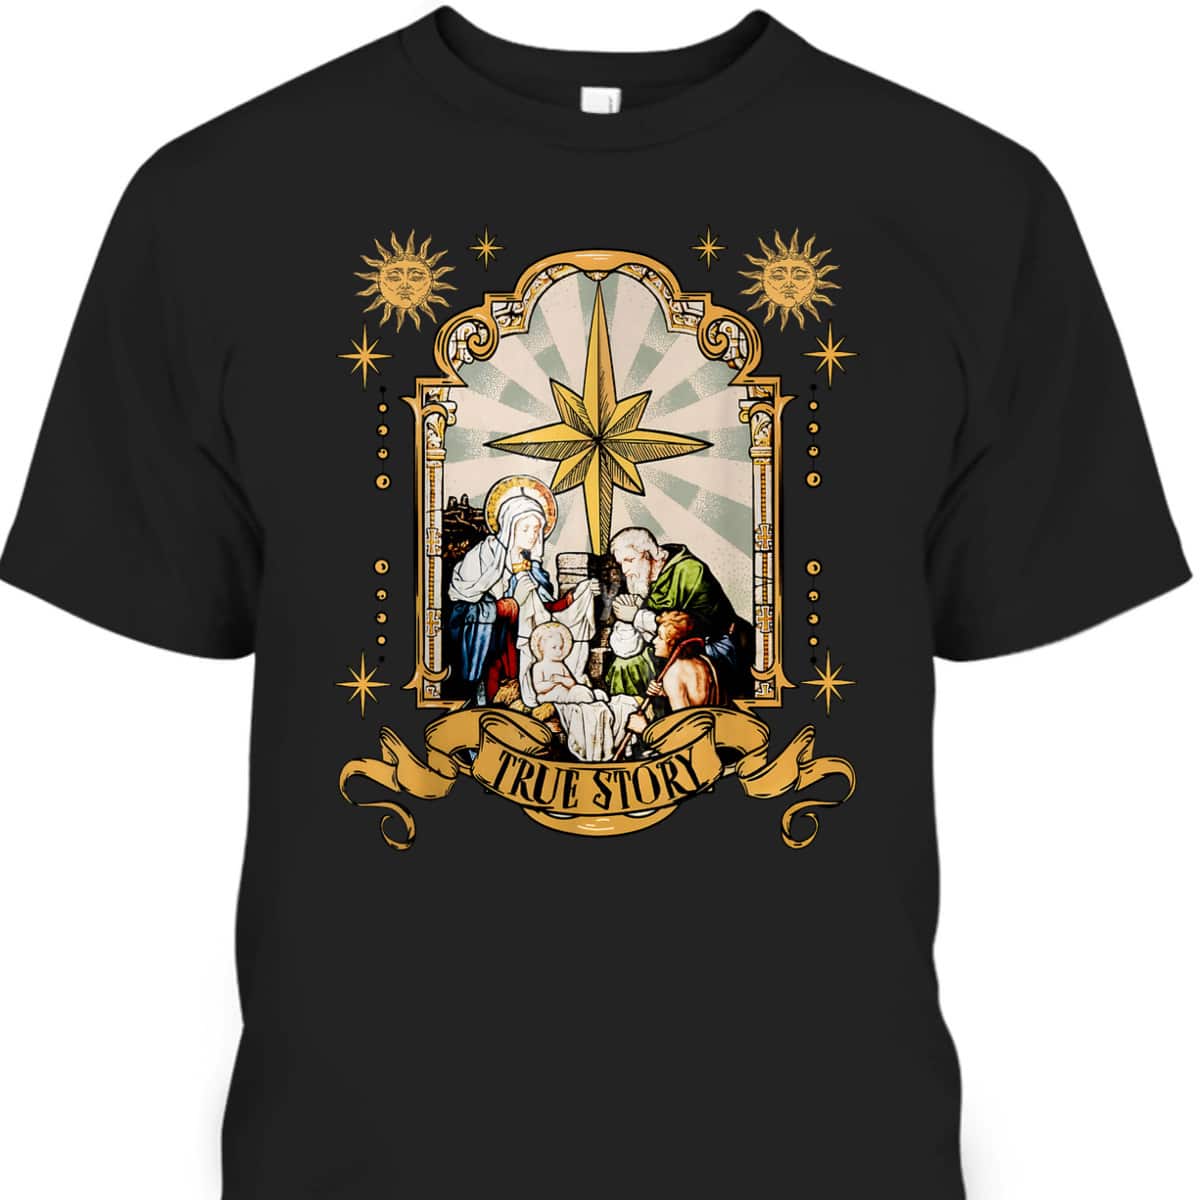 True Story Jesus Religious Nativity Christian Christmas Xmas T-Shirt